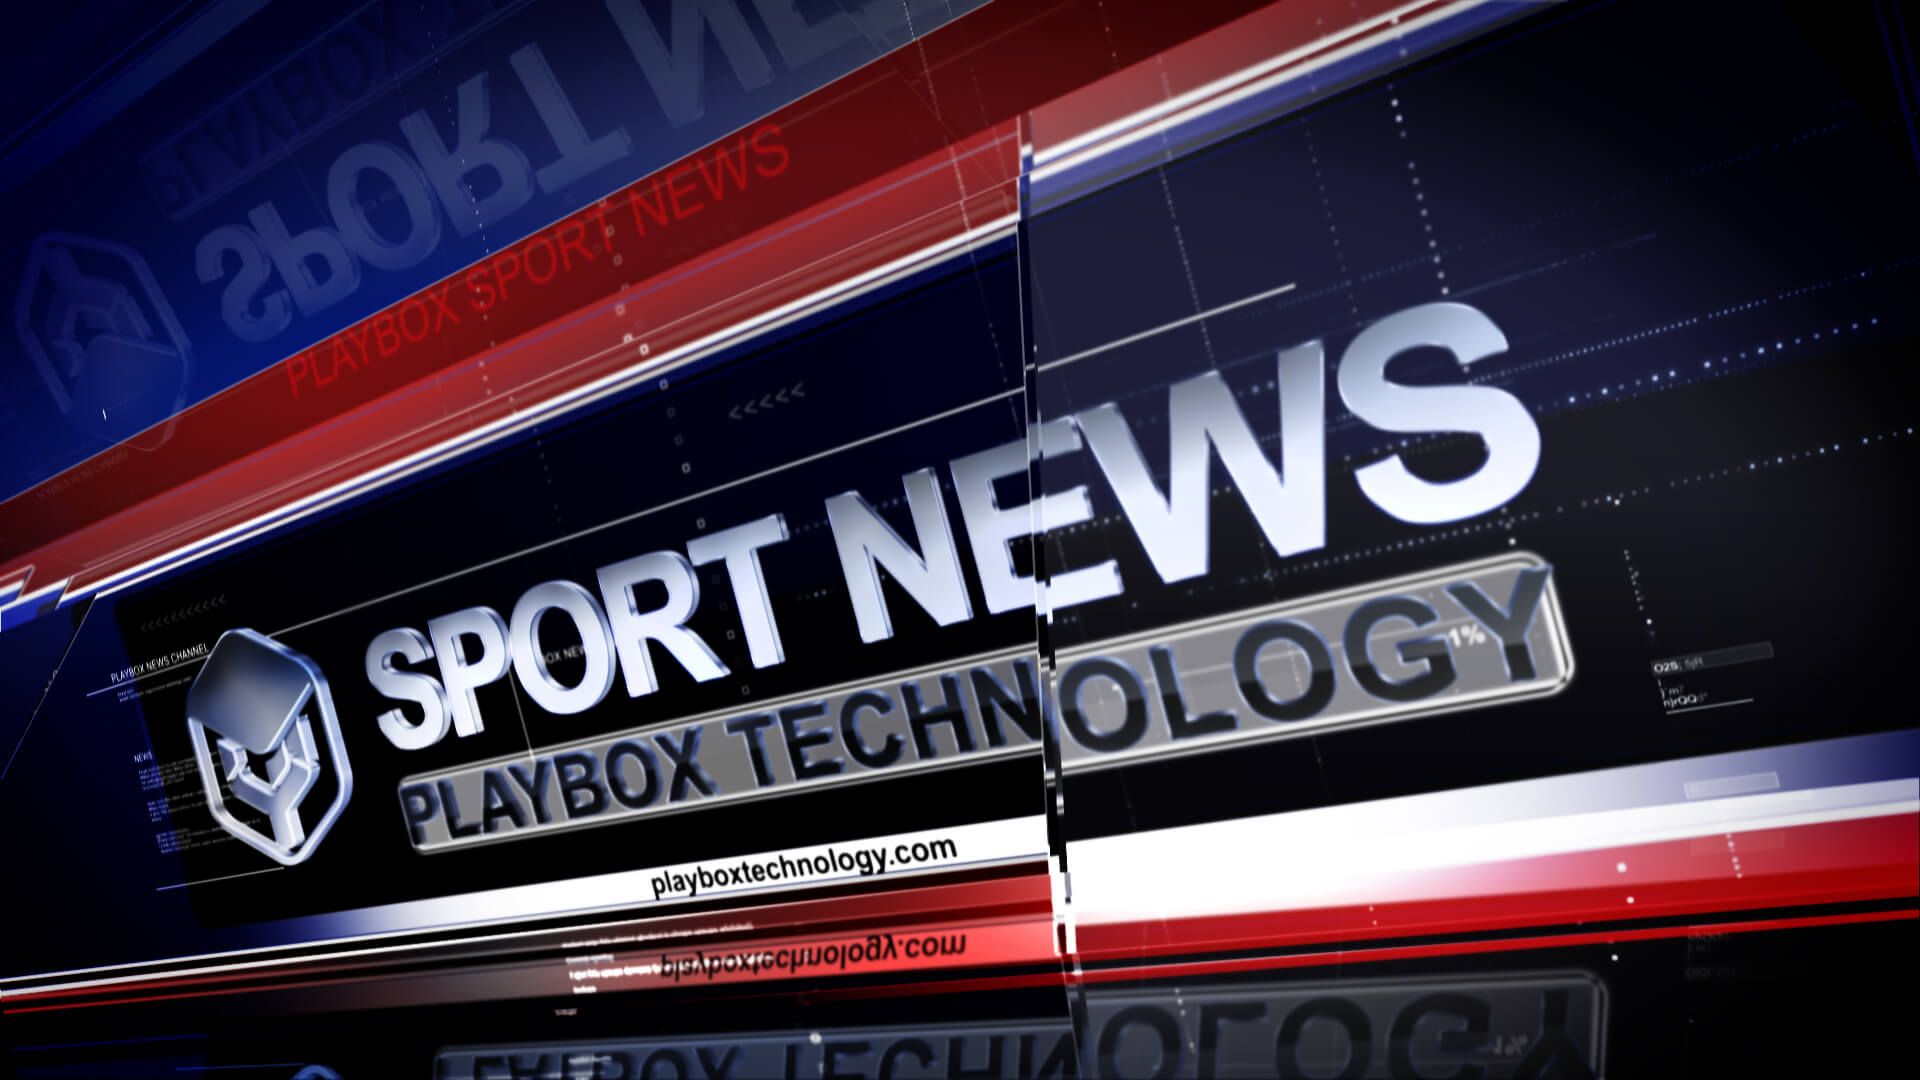 Playbox Technology logo